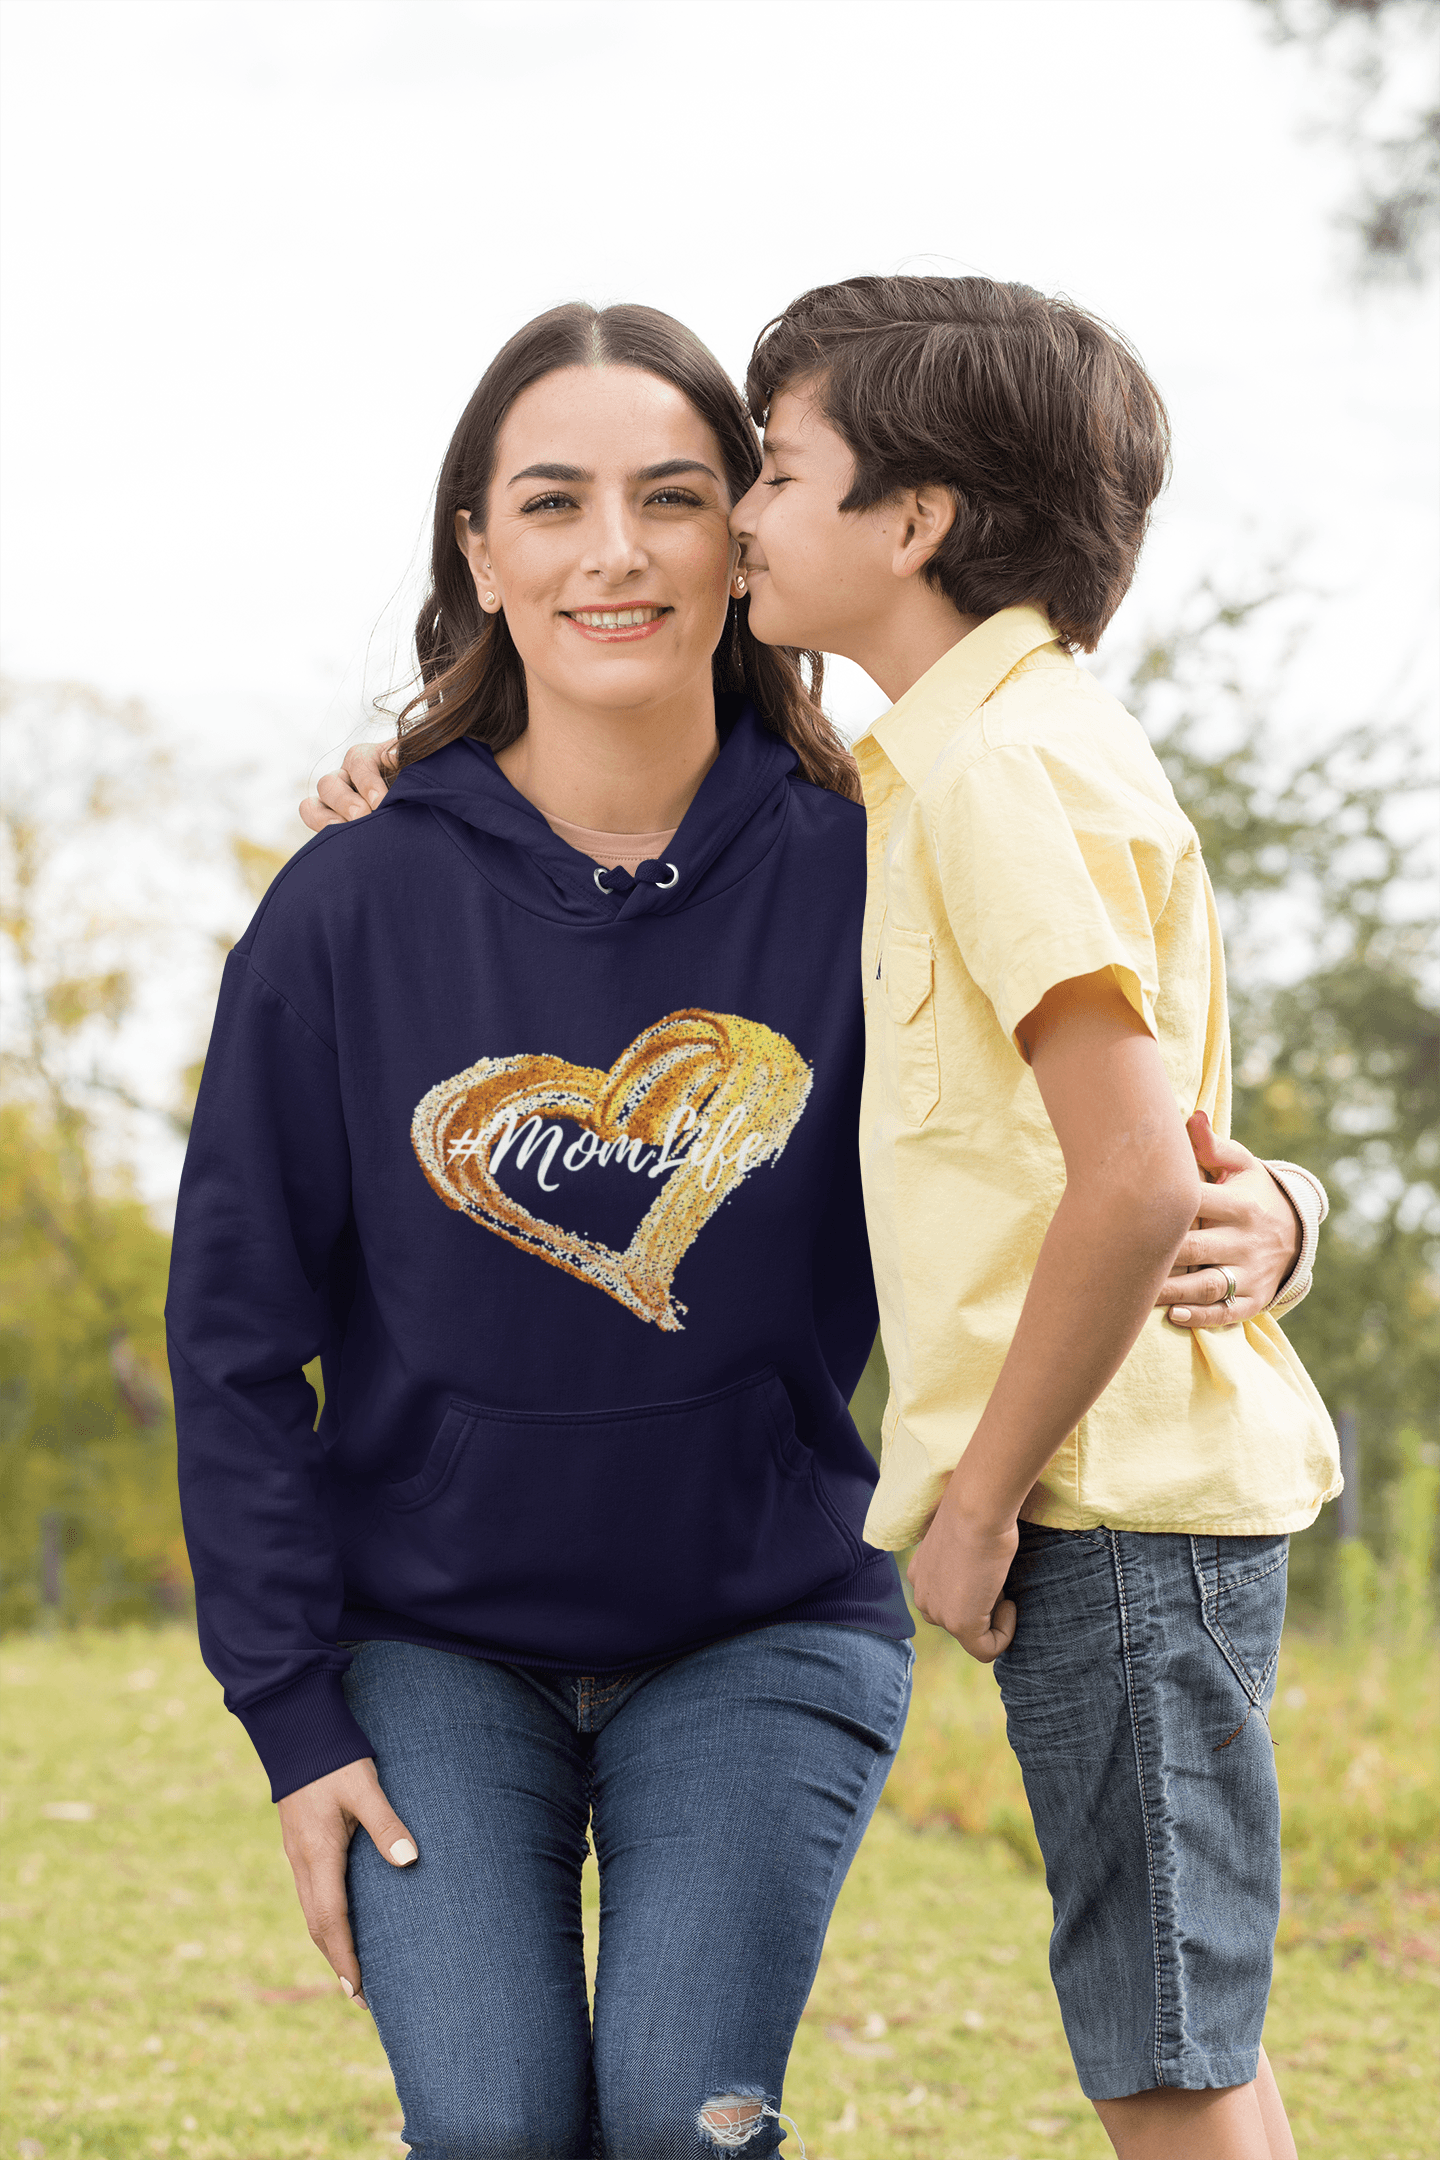 Mom Life Open Heart of Gold Heavy Blend™ Hooded Sweatshirt - Munchkin Place Shop 